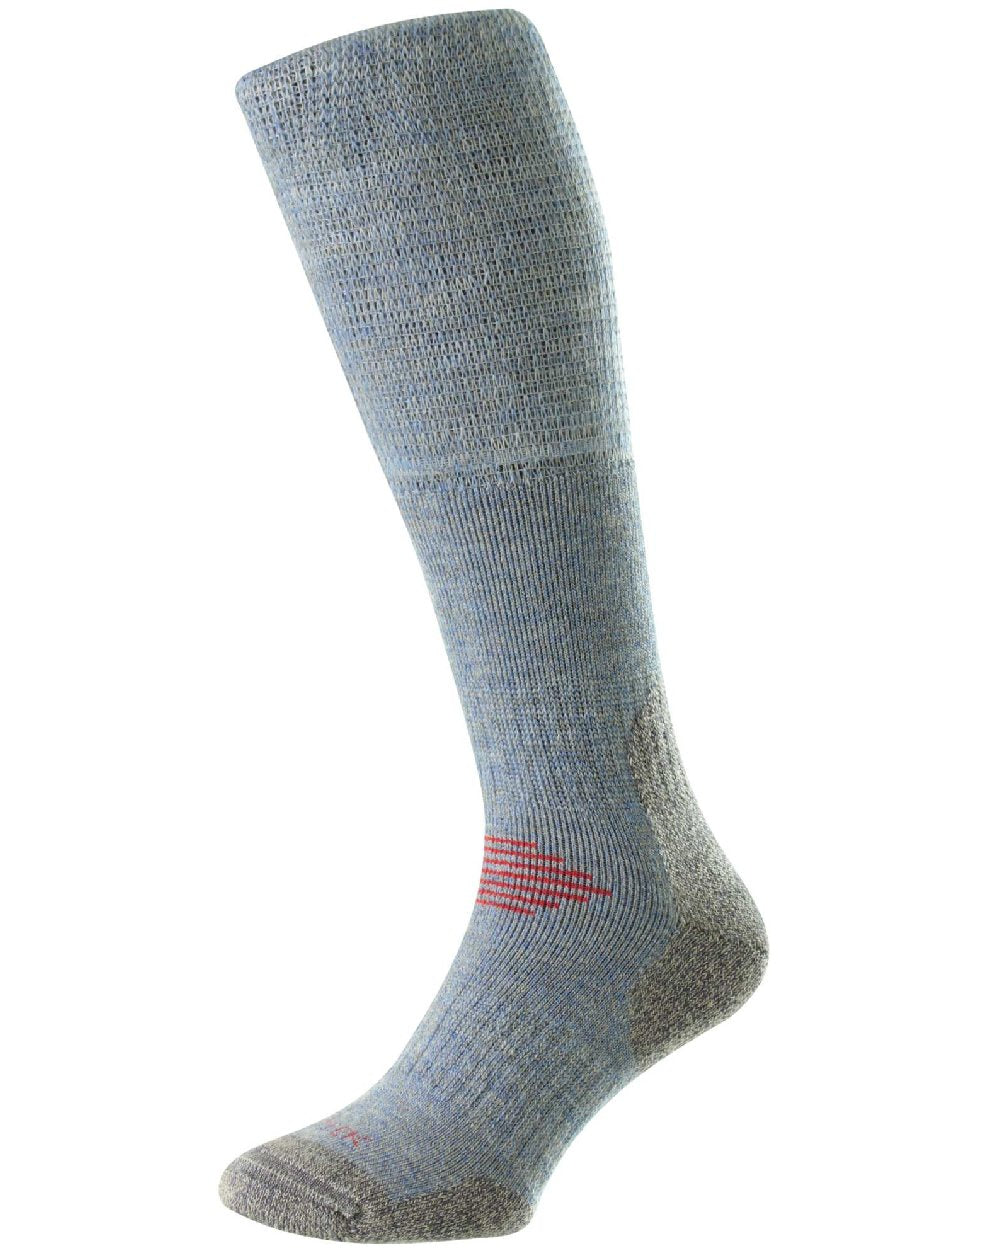 HJ Hall ProTrek Mountain Comfort Top Socks in Denim Grey 